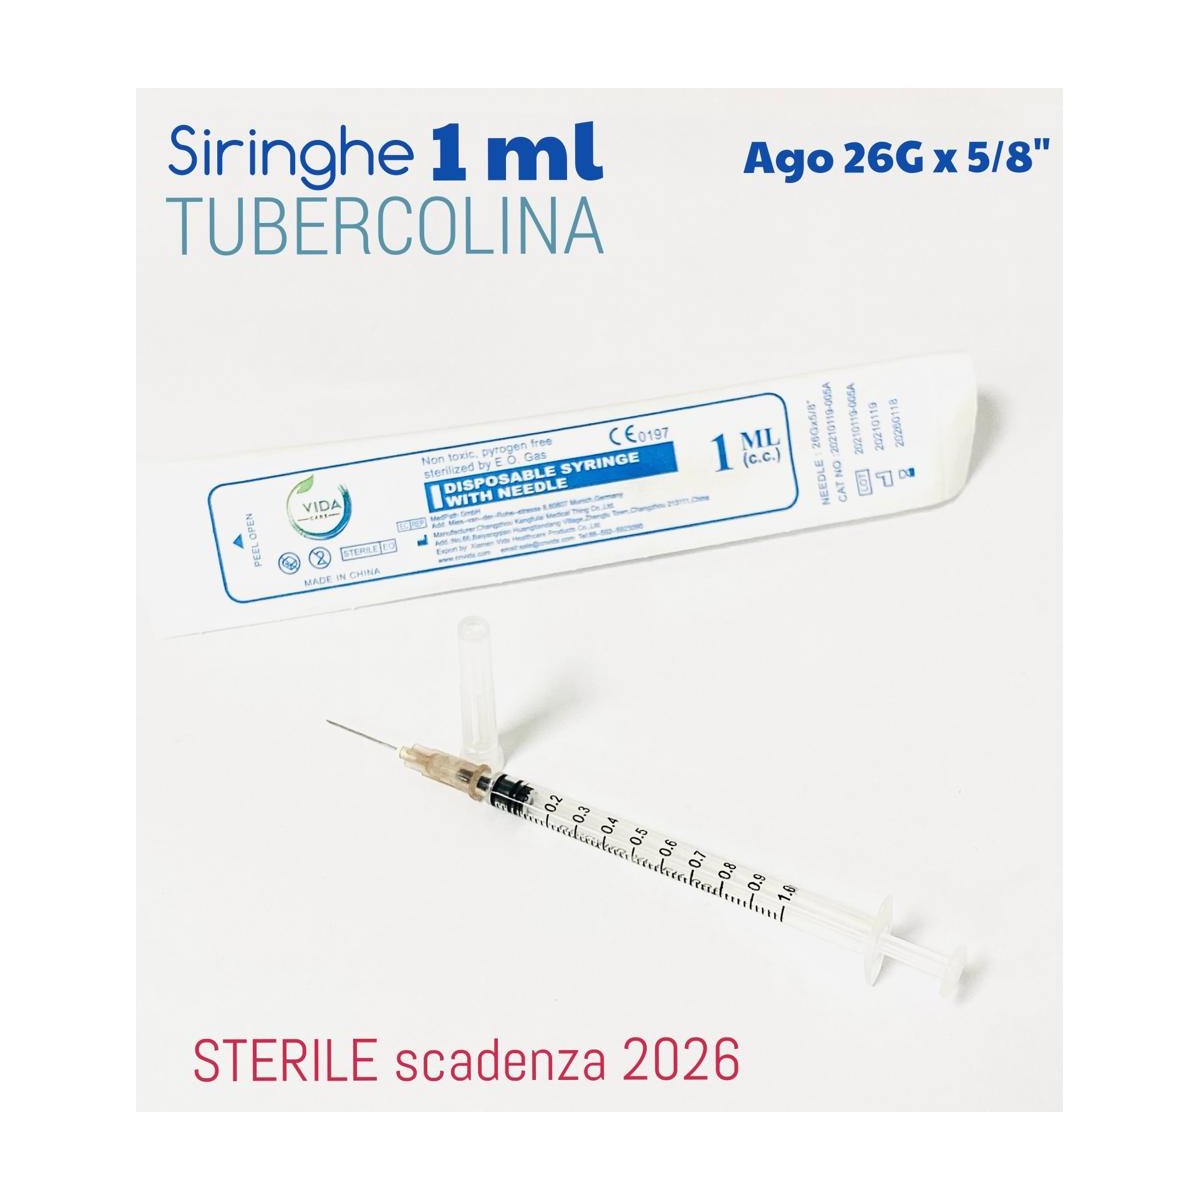 Siringa Tubercolina 1 ml G26 - 200 pezzi, Sterile